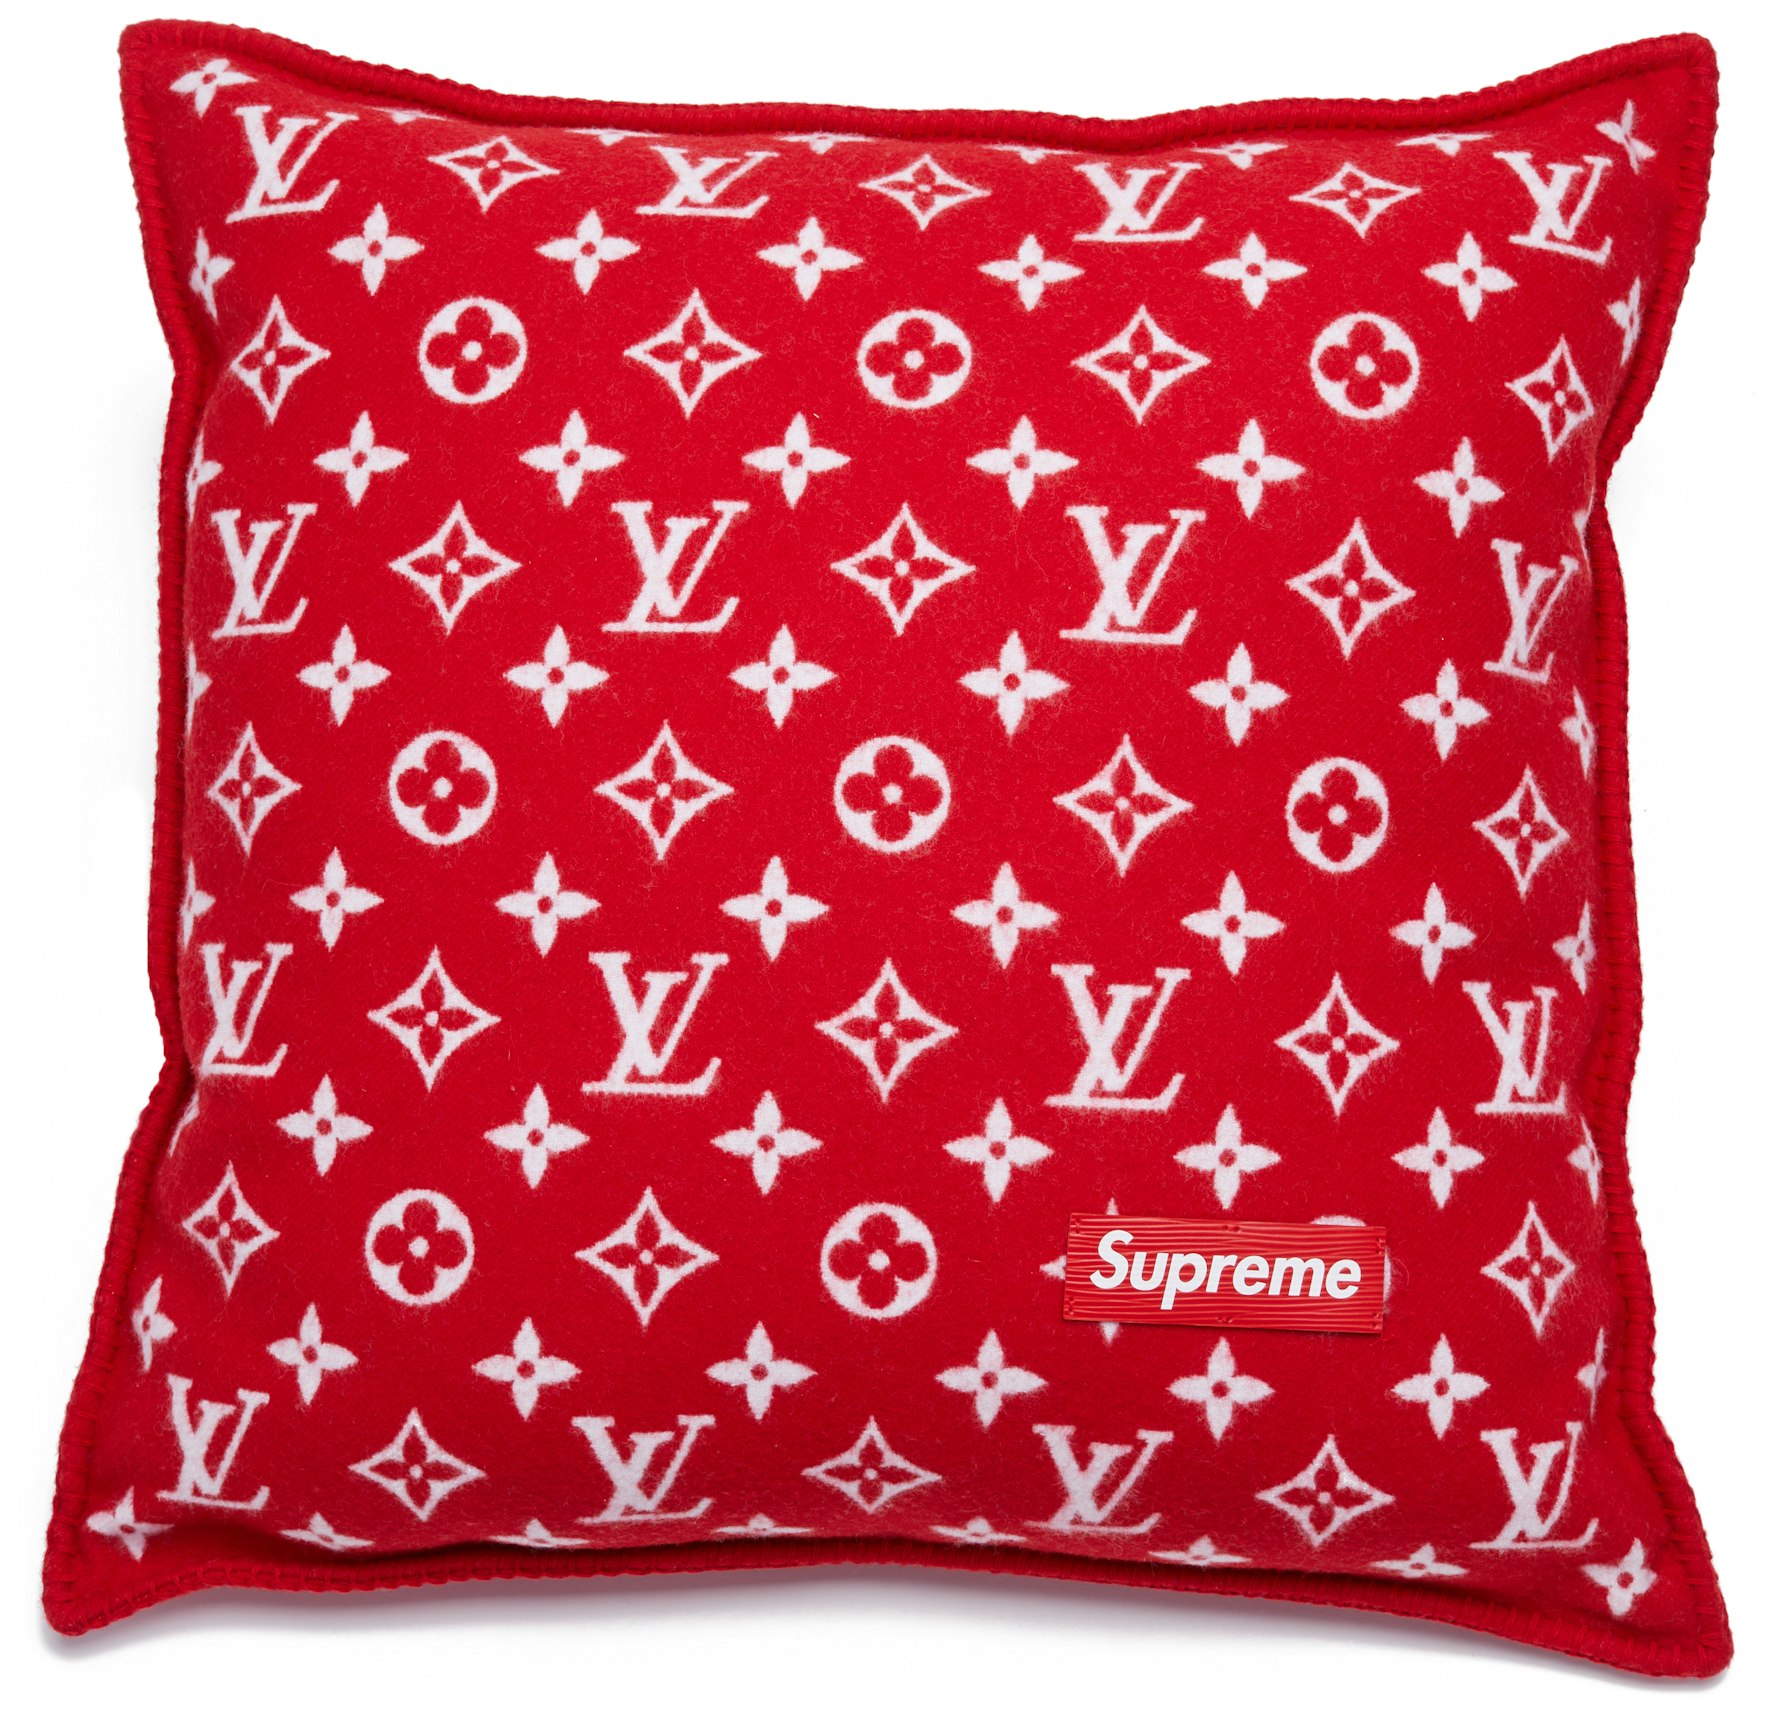 Supreme x Louis Vuitton Monogram Pillow Red - SS17 -